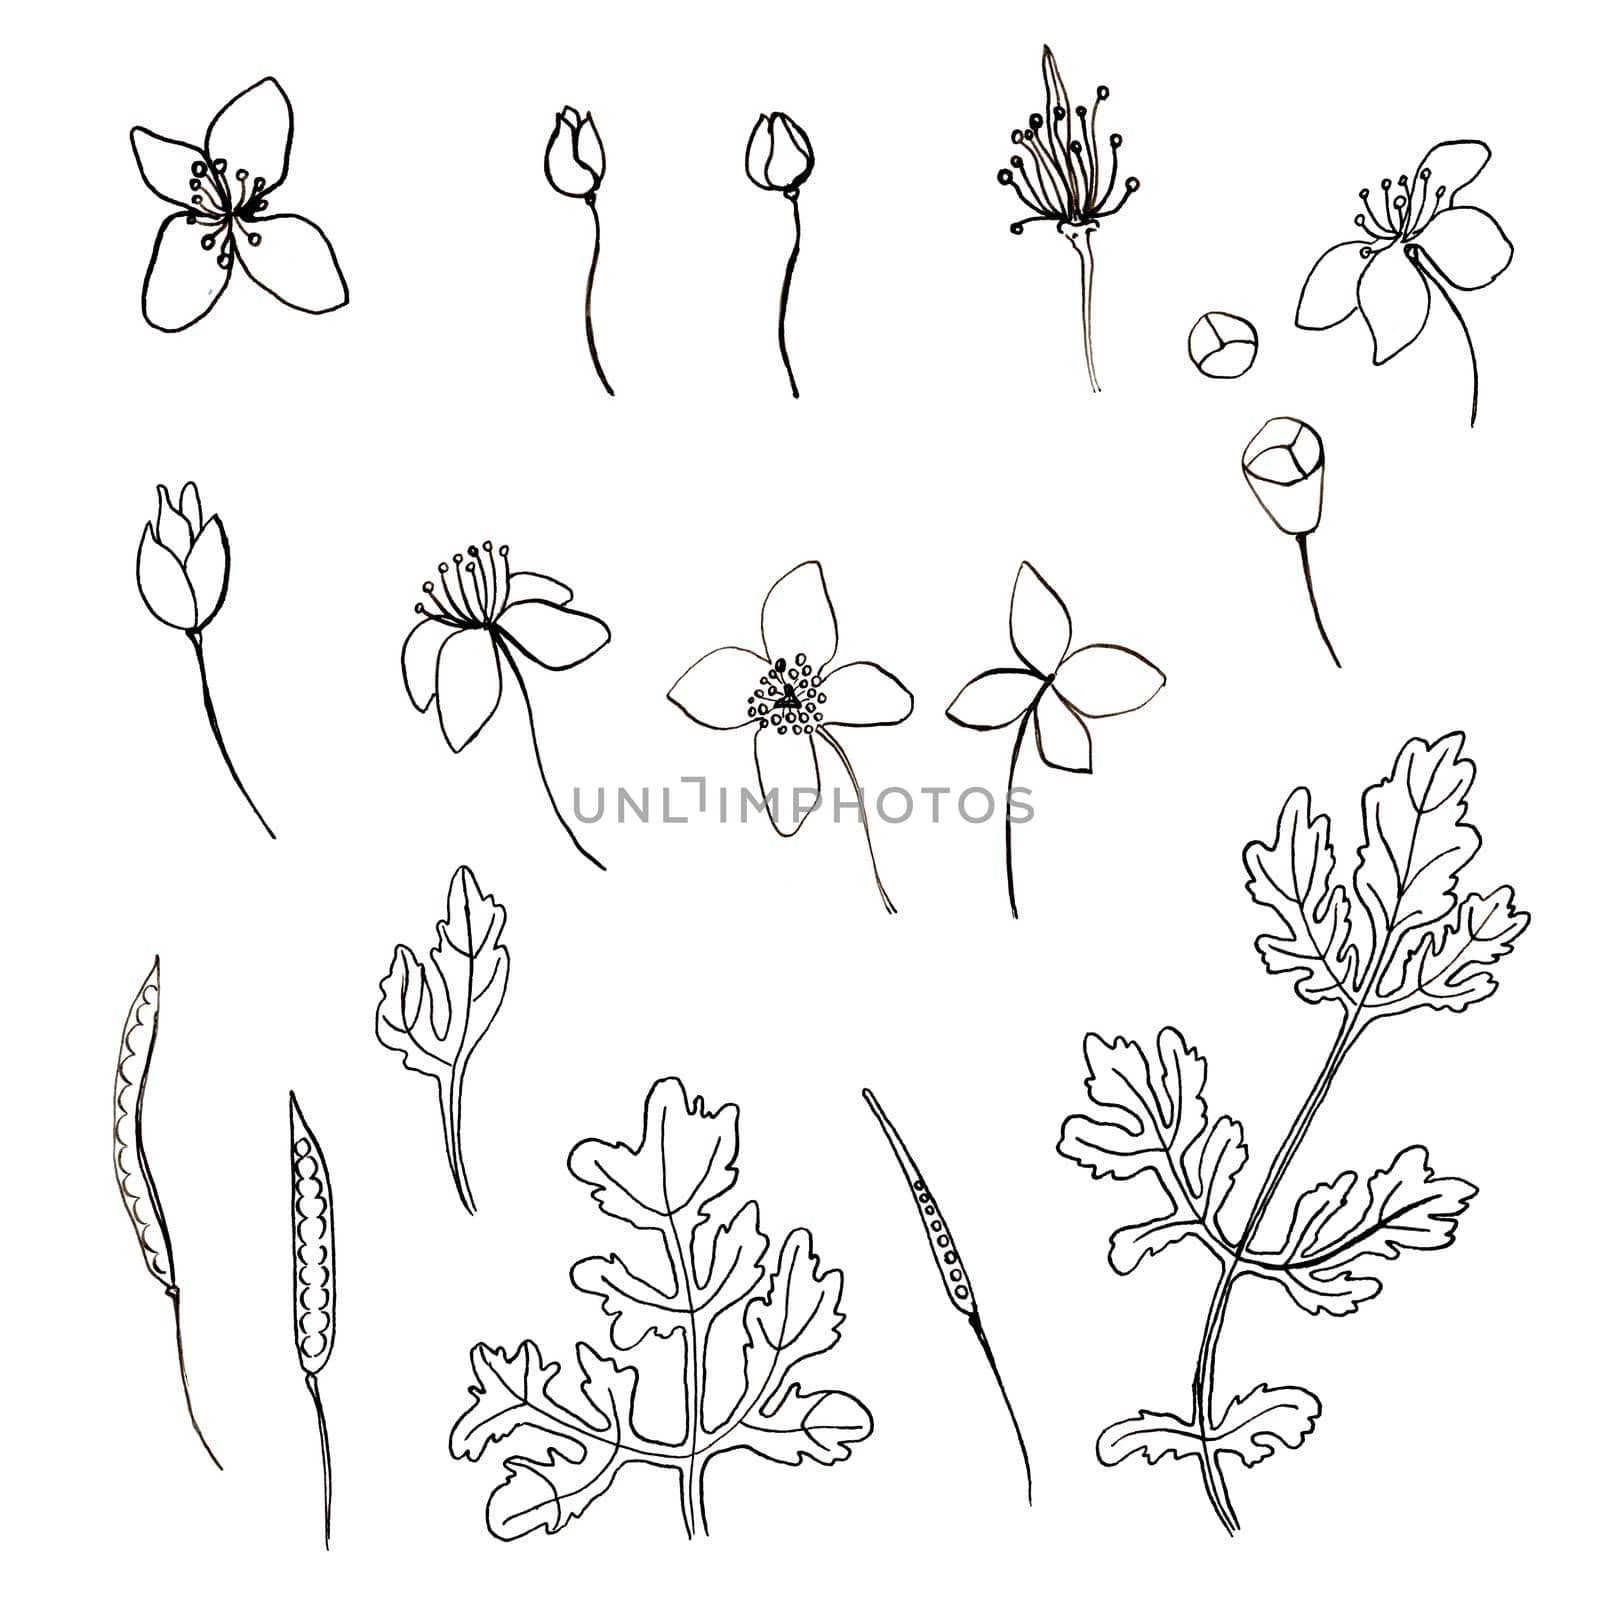 Celandine flower set hand drawn graphic botanical illustration, doodle ink sketch isolated on white, medical plant, contour style, line art for greeting card, invitation, medicine, design cosmetic